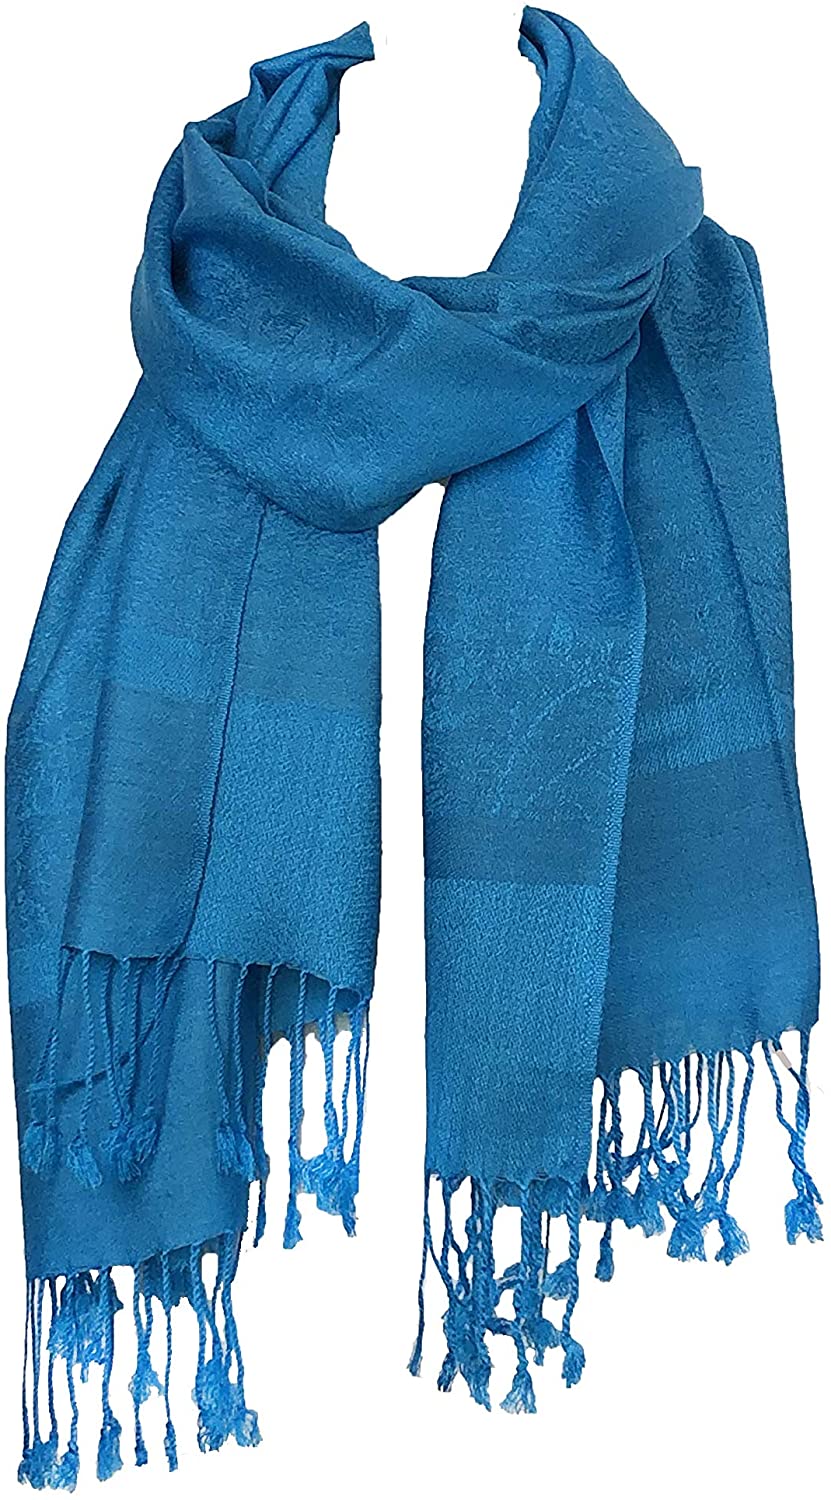 Turquoise Pashmina Style Scarf, Lovely Soft - Lovely Summer wrap, Fantastic Gift